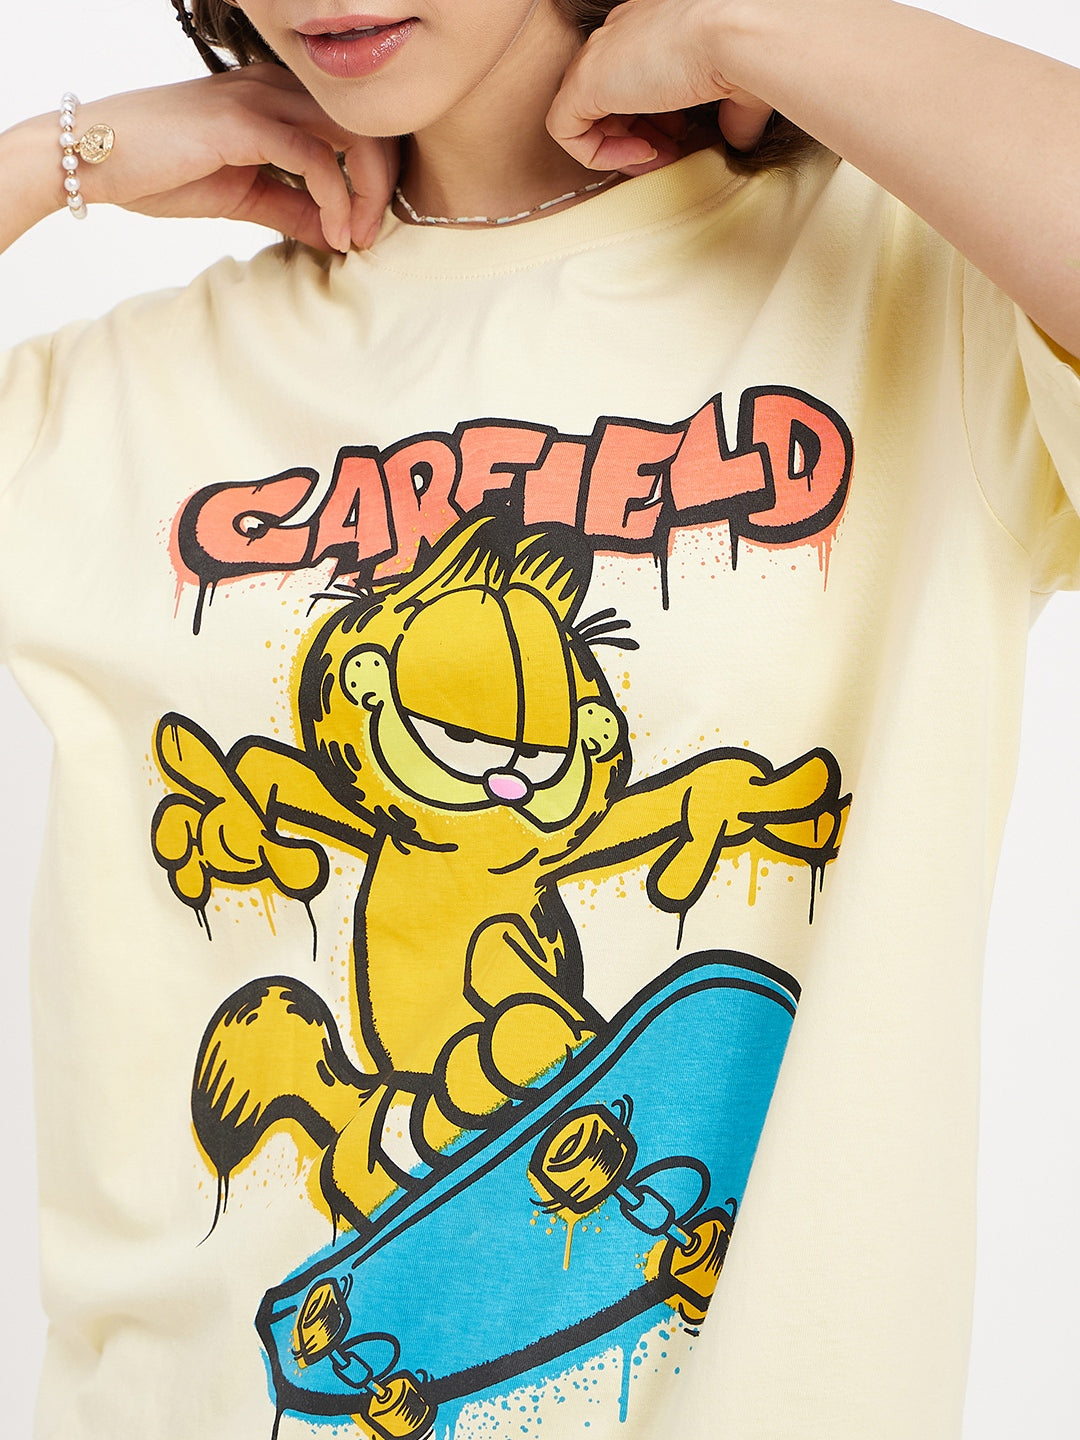 Garfield: Oversized Tee